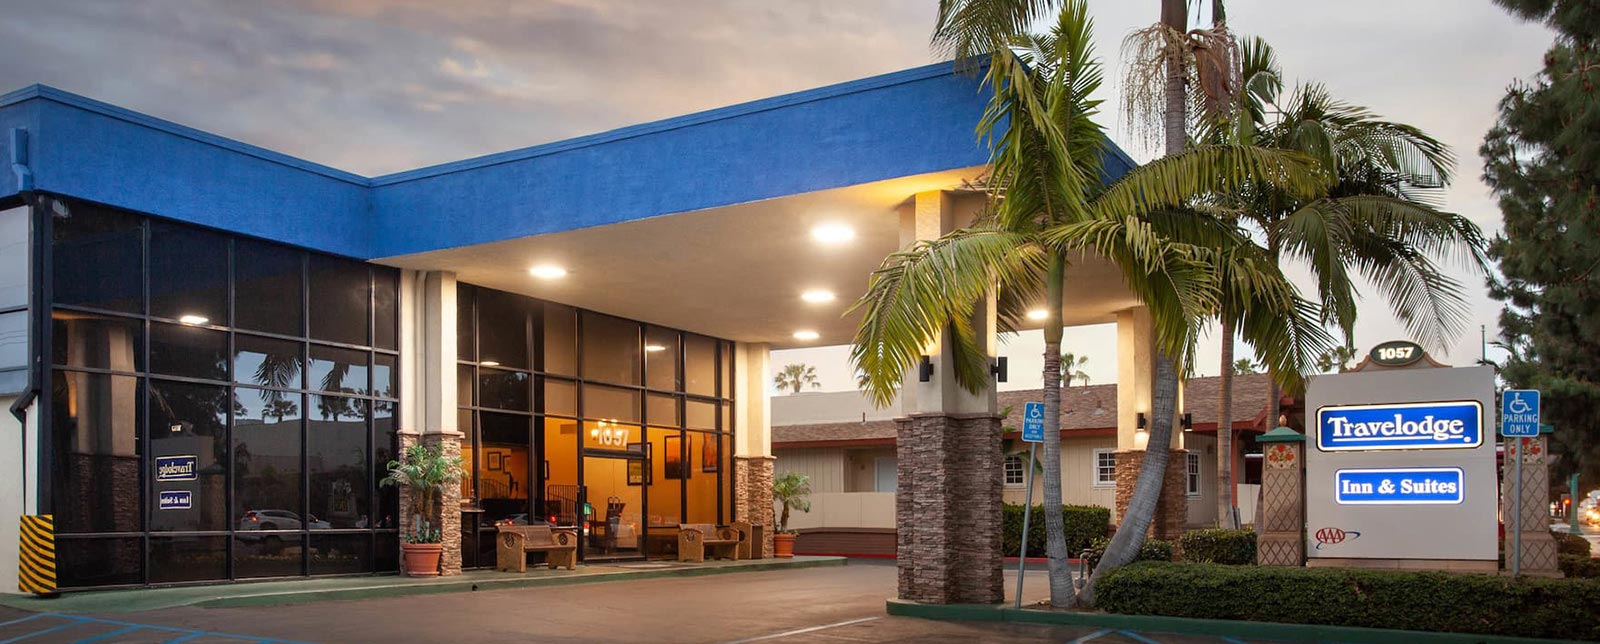 Location of Travelodge Anaheim Inn & Suites California